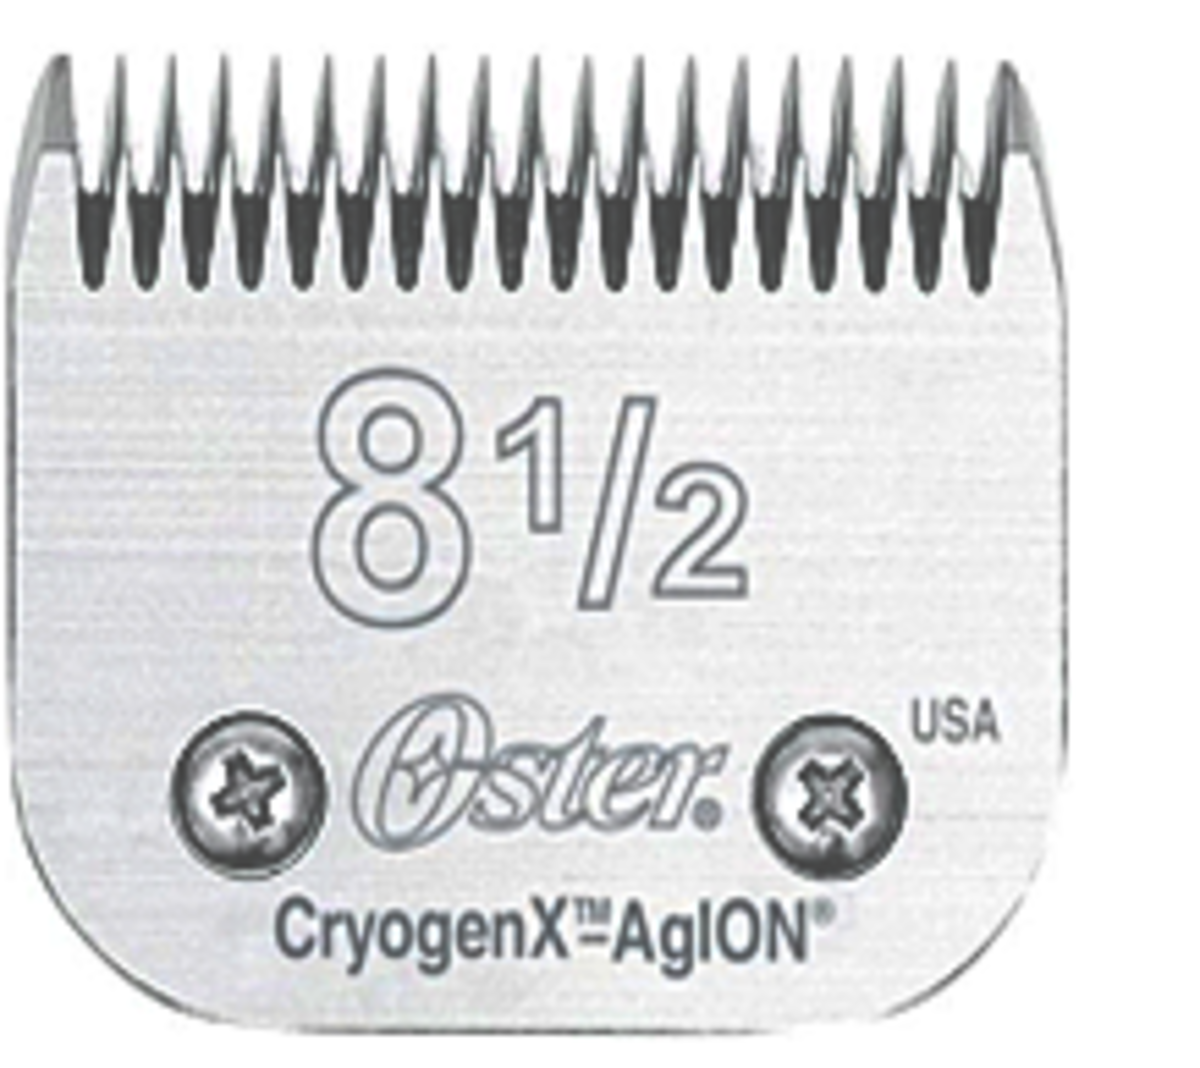 Oster CryogenX #8 1/2 Blade